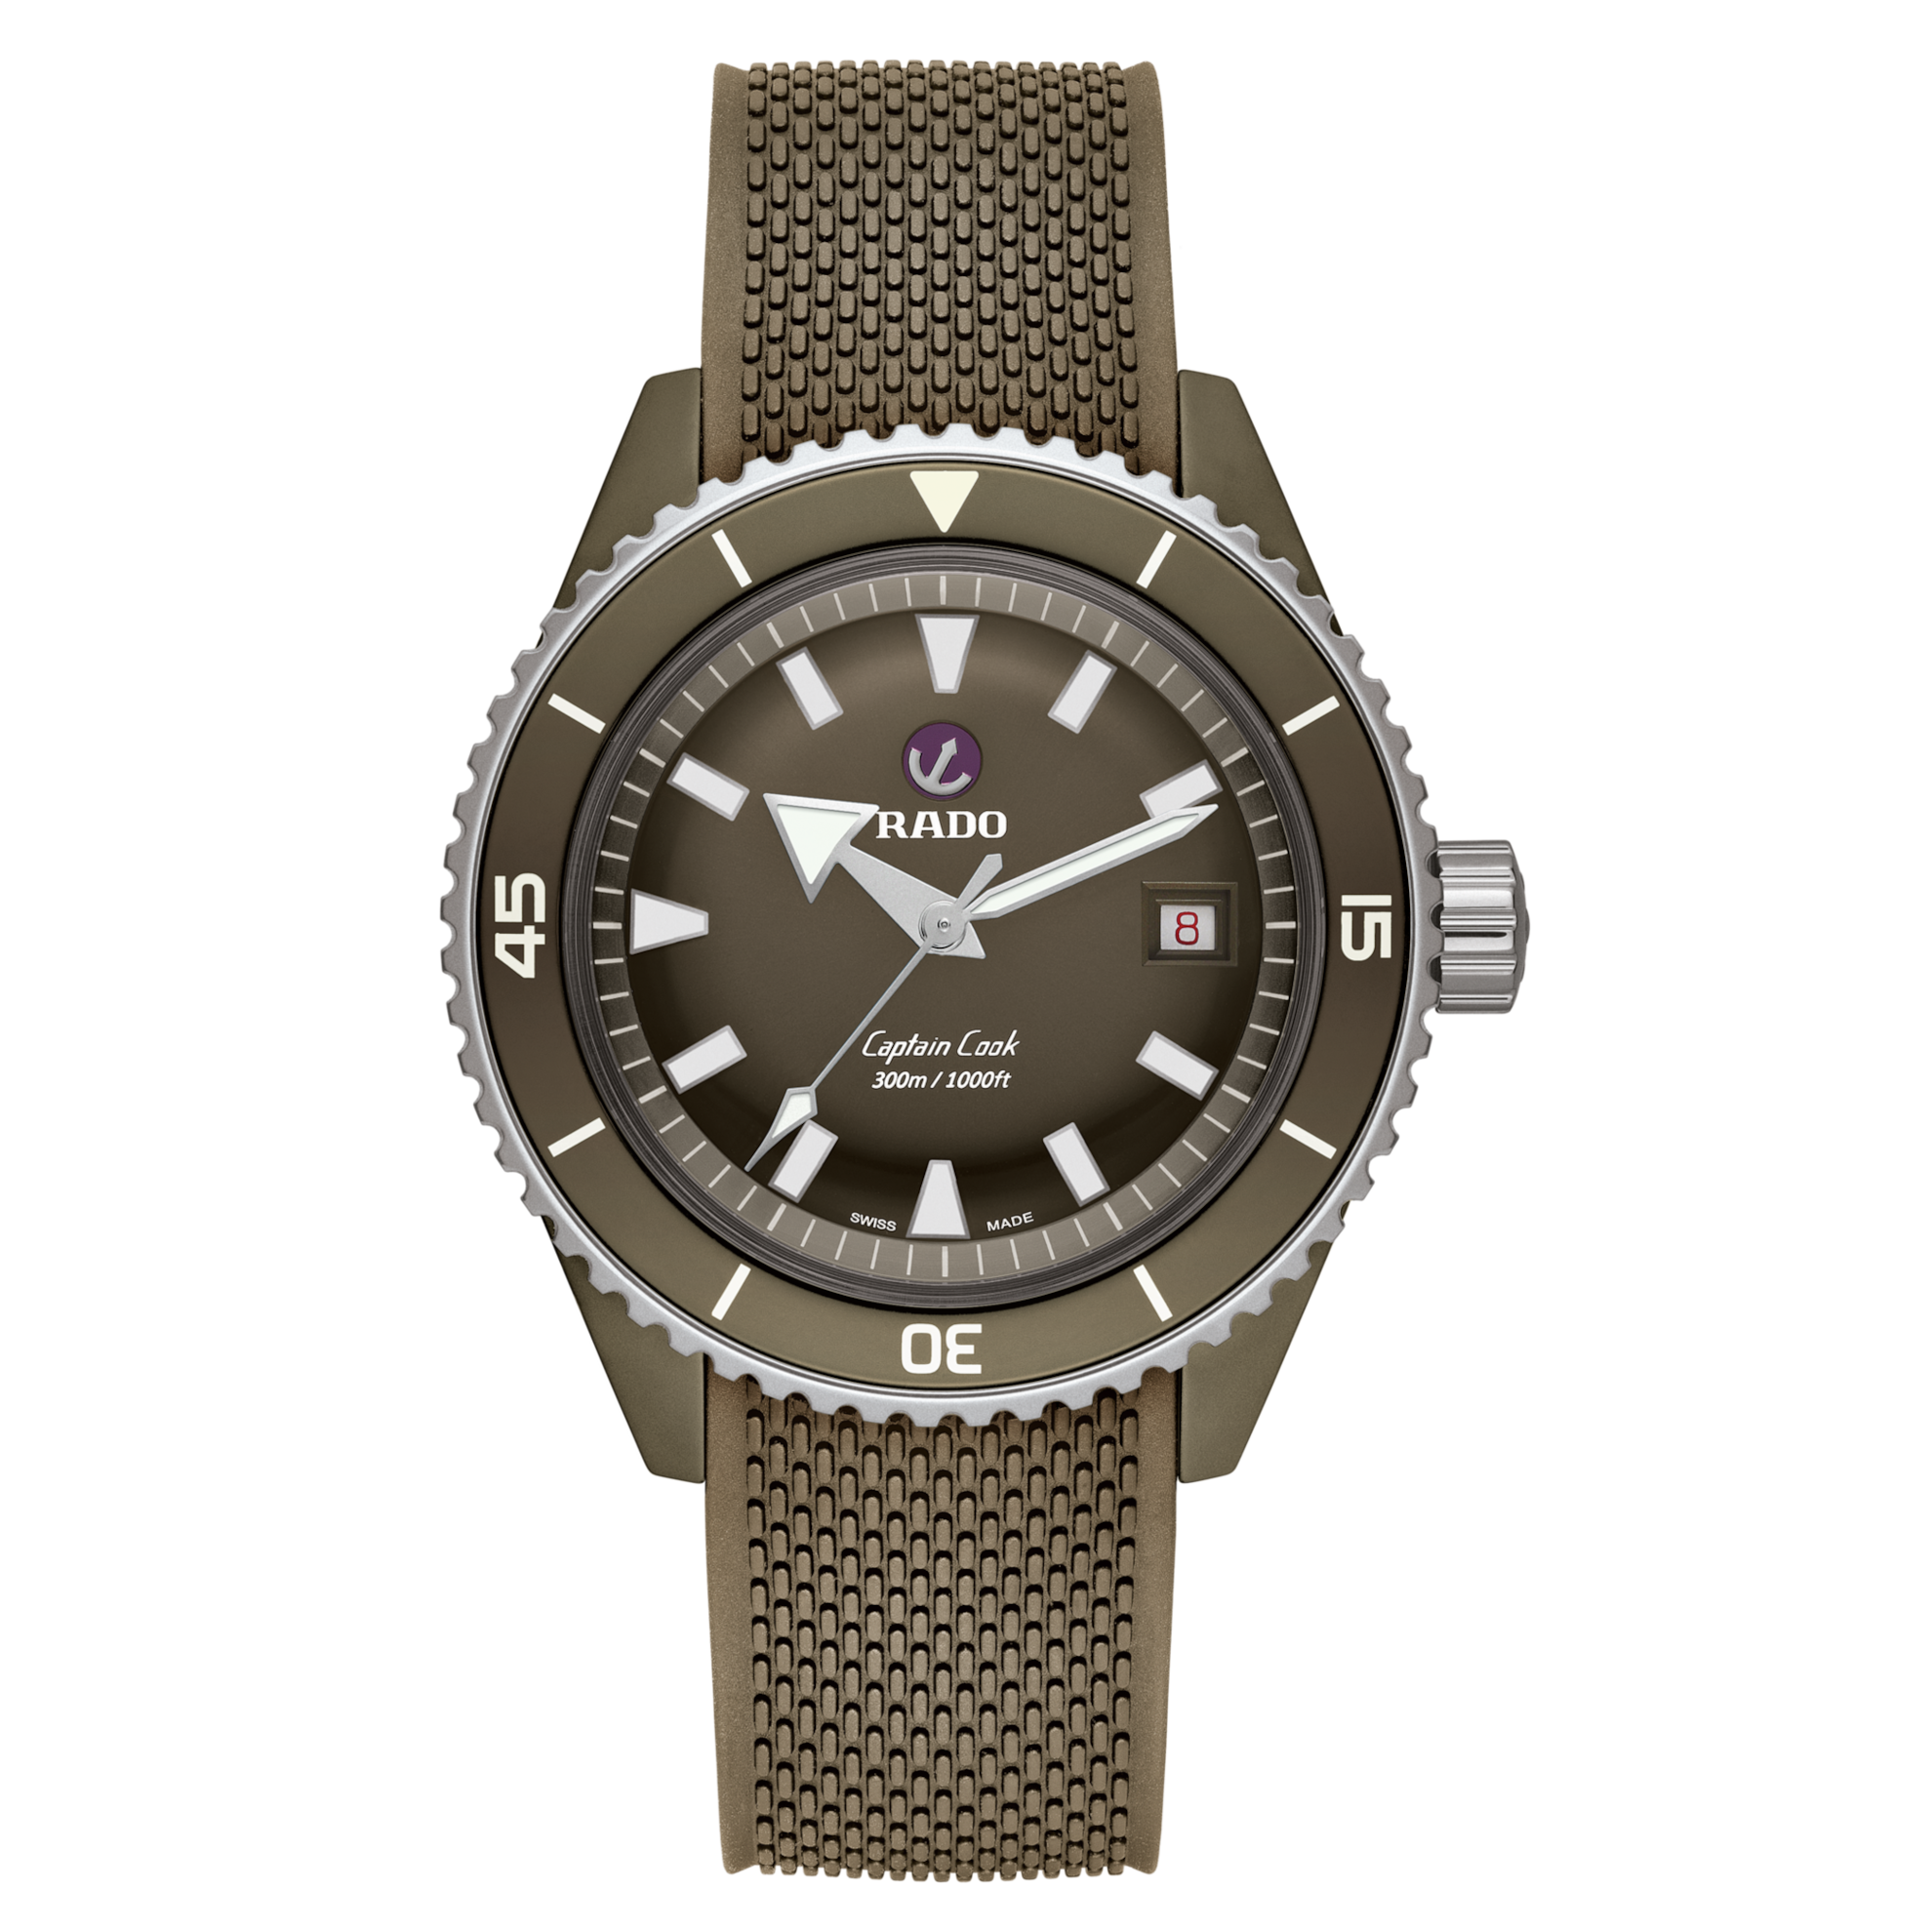 Captain Cook High-Tech Ceramic Diver R32130318 - Kamal Watch Company